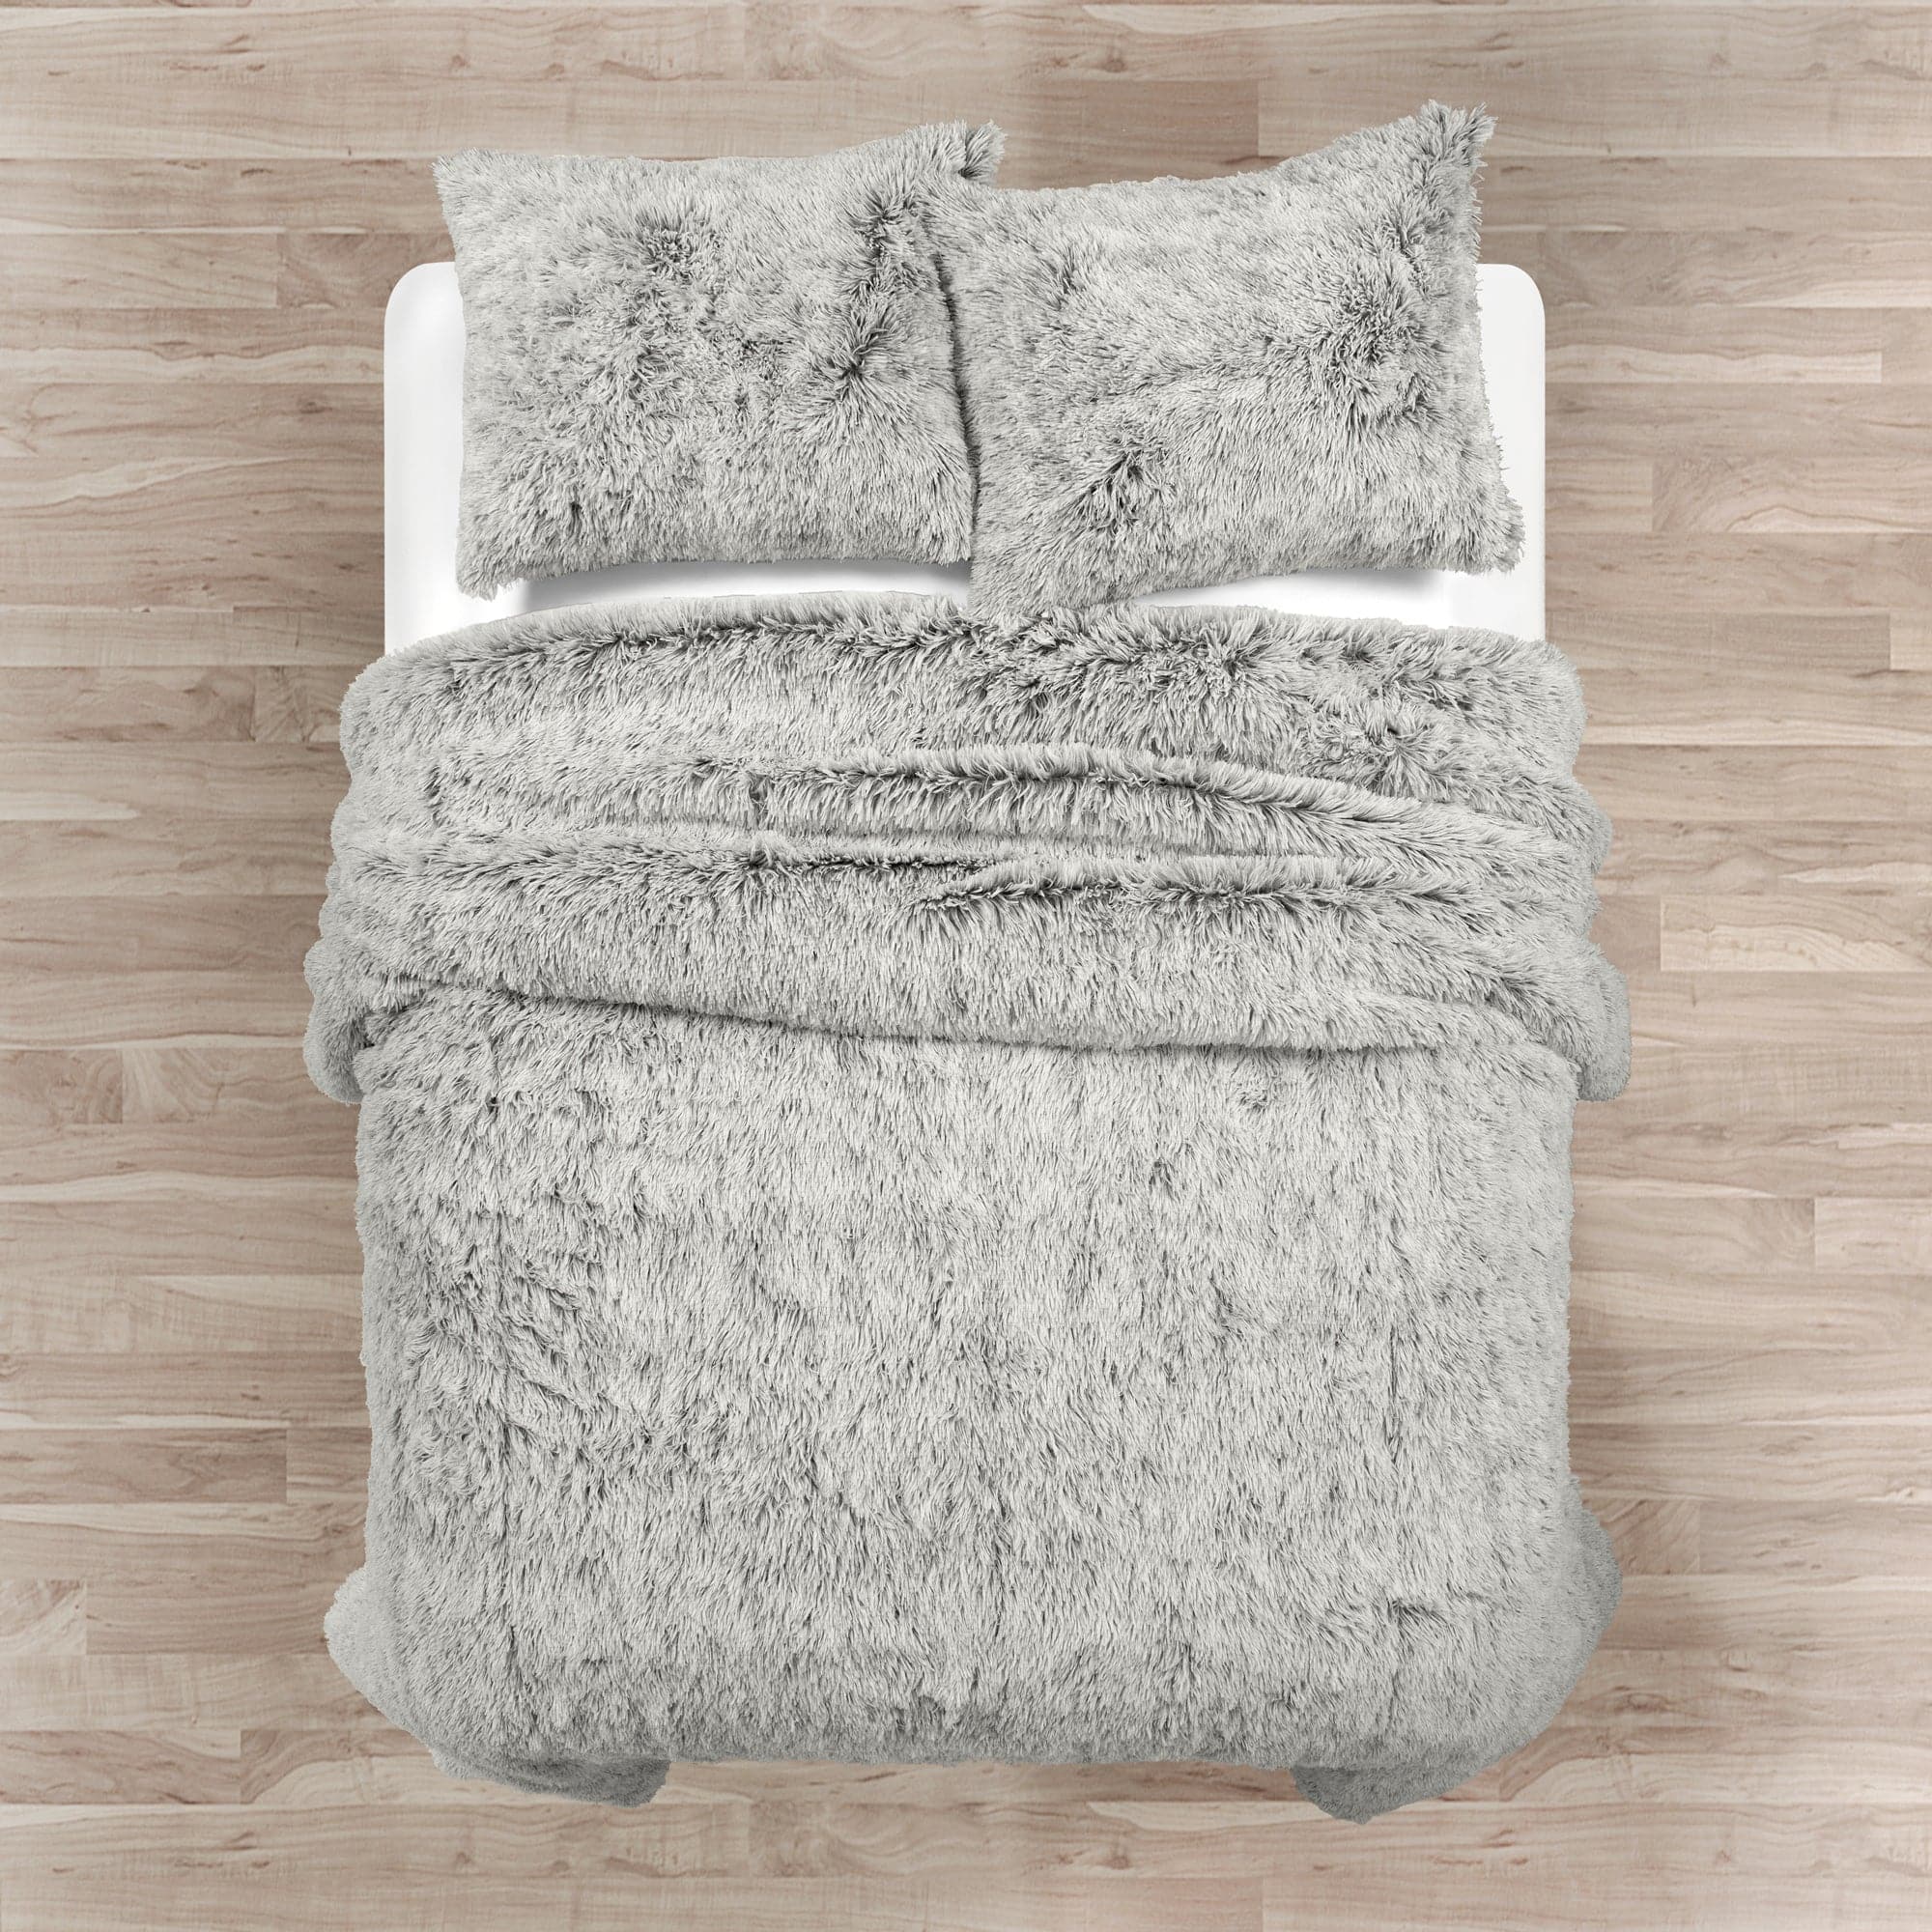 Machine Washable Plush King Extra Large Comforter Made with Cozy